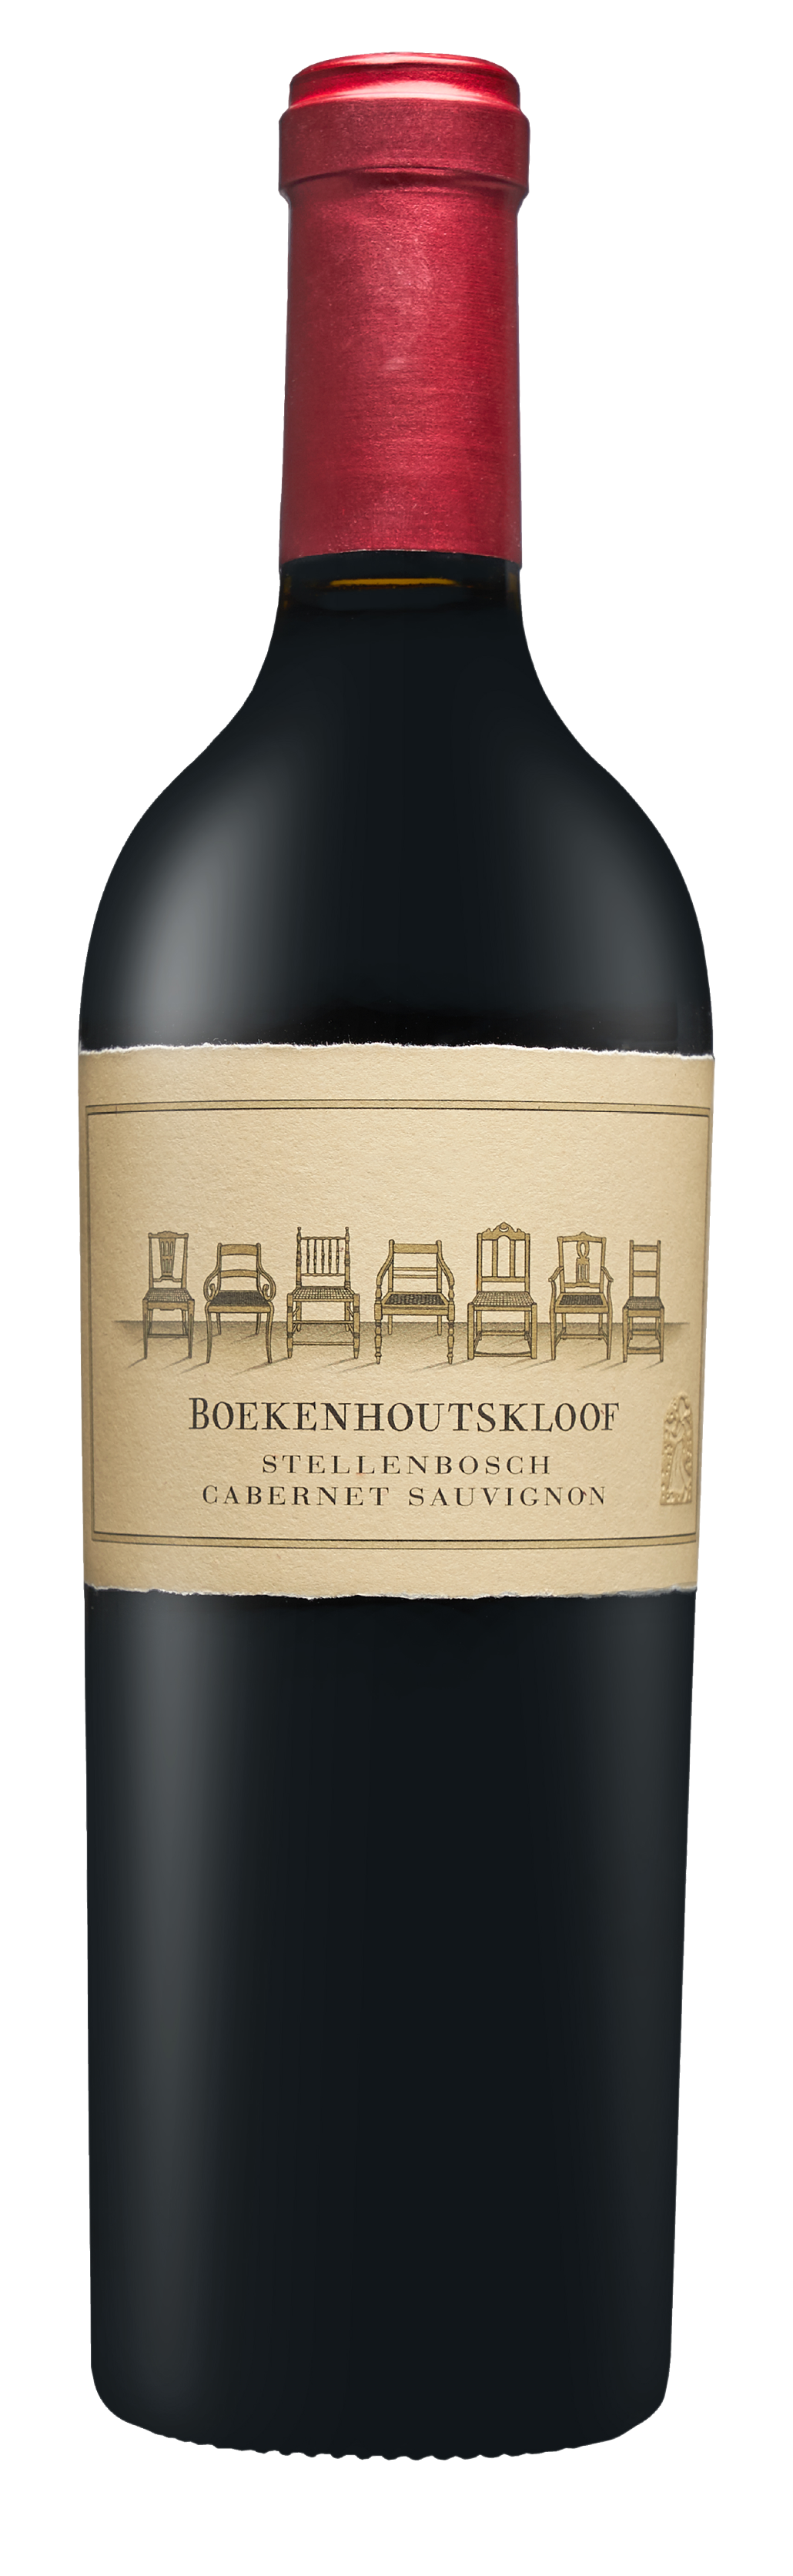 Boekenhoutskloof<br />2015 Stellenbosch Cabernet Sauvignon<br>South Africa